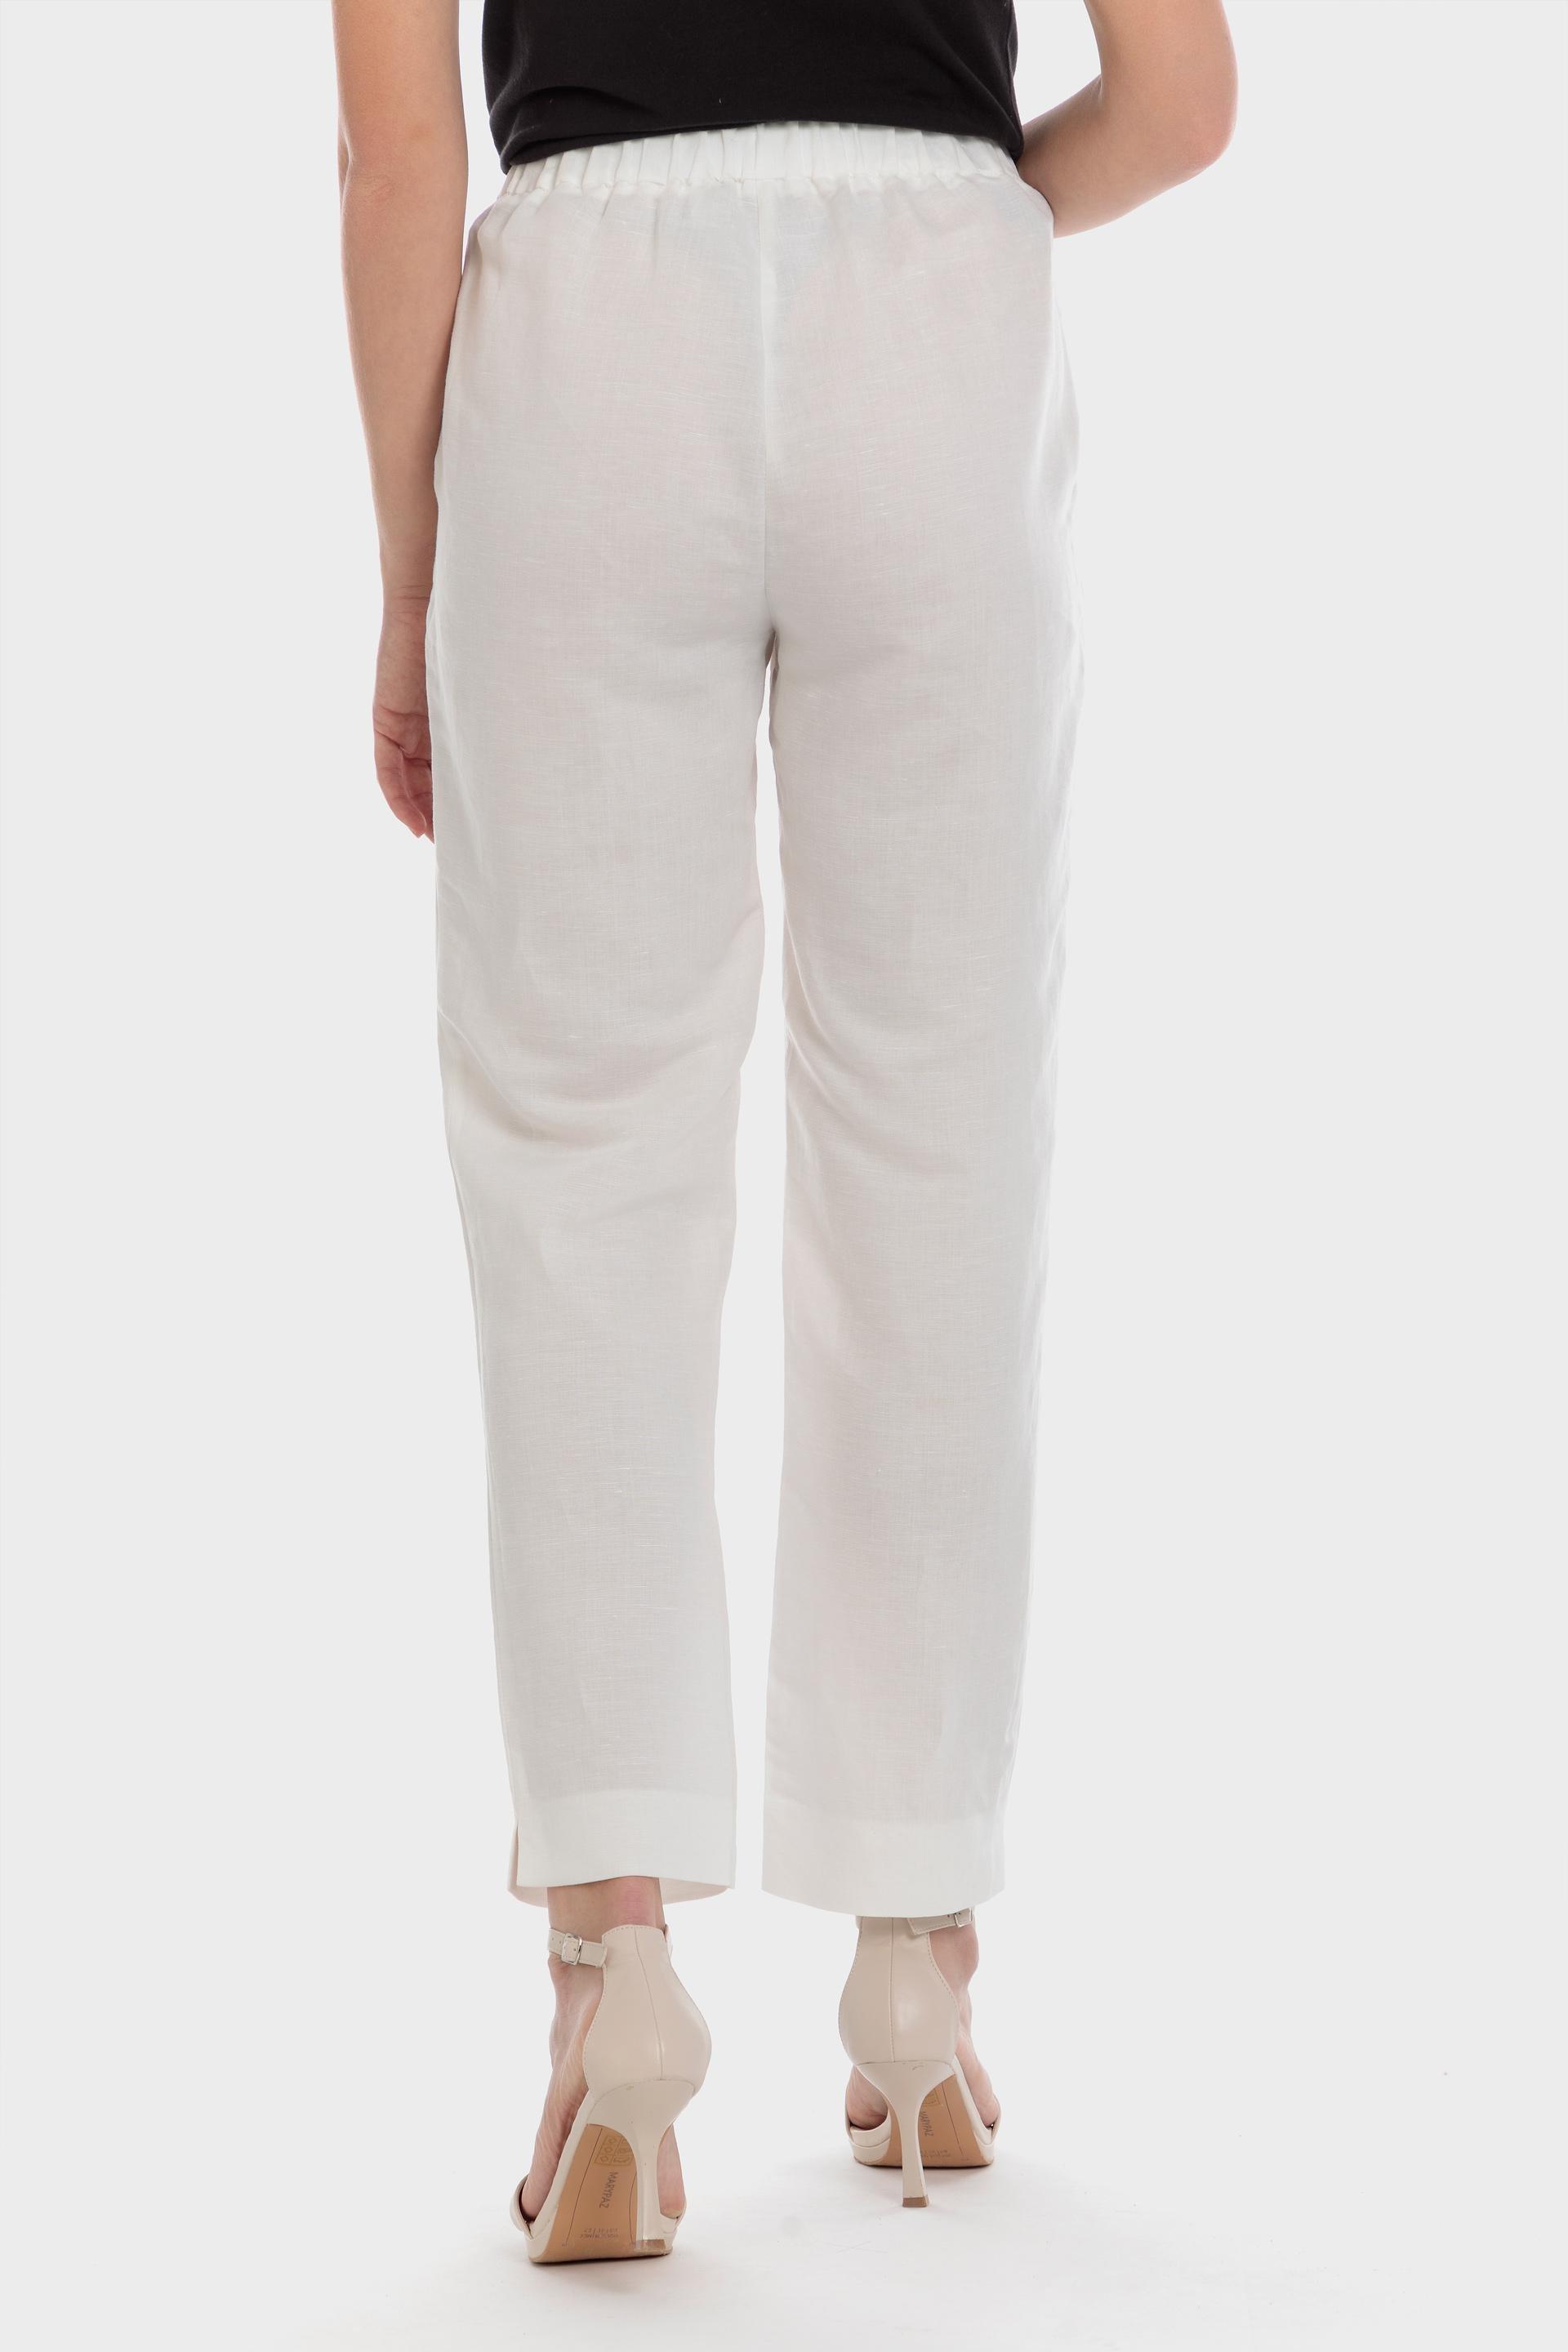 Punt Roma - White Linen Trousers